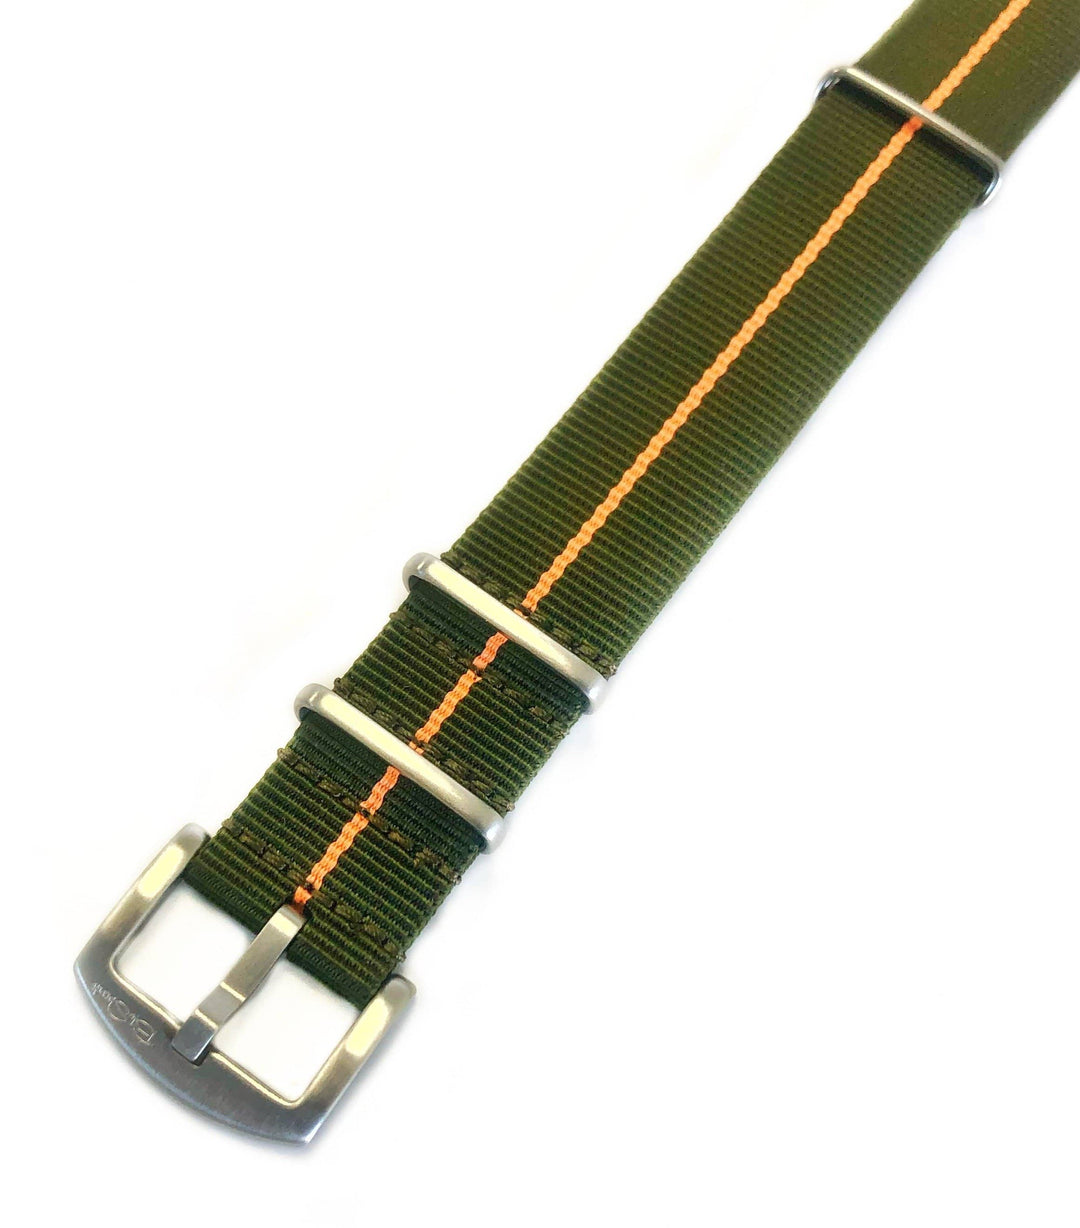 BluShark Original Copy of Army Green Watch Strap